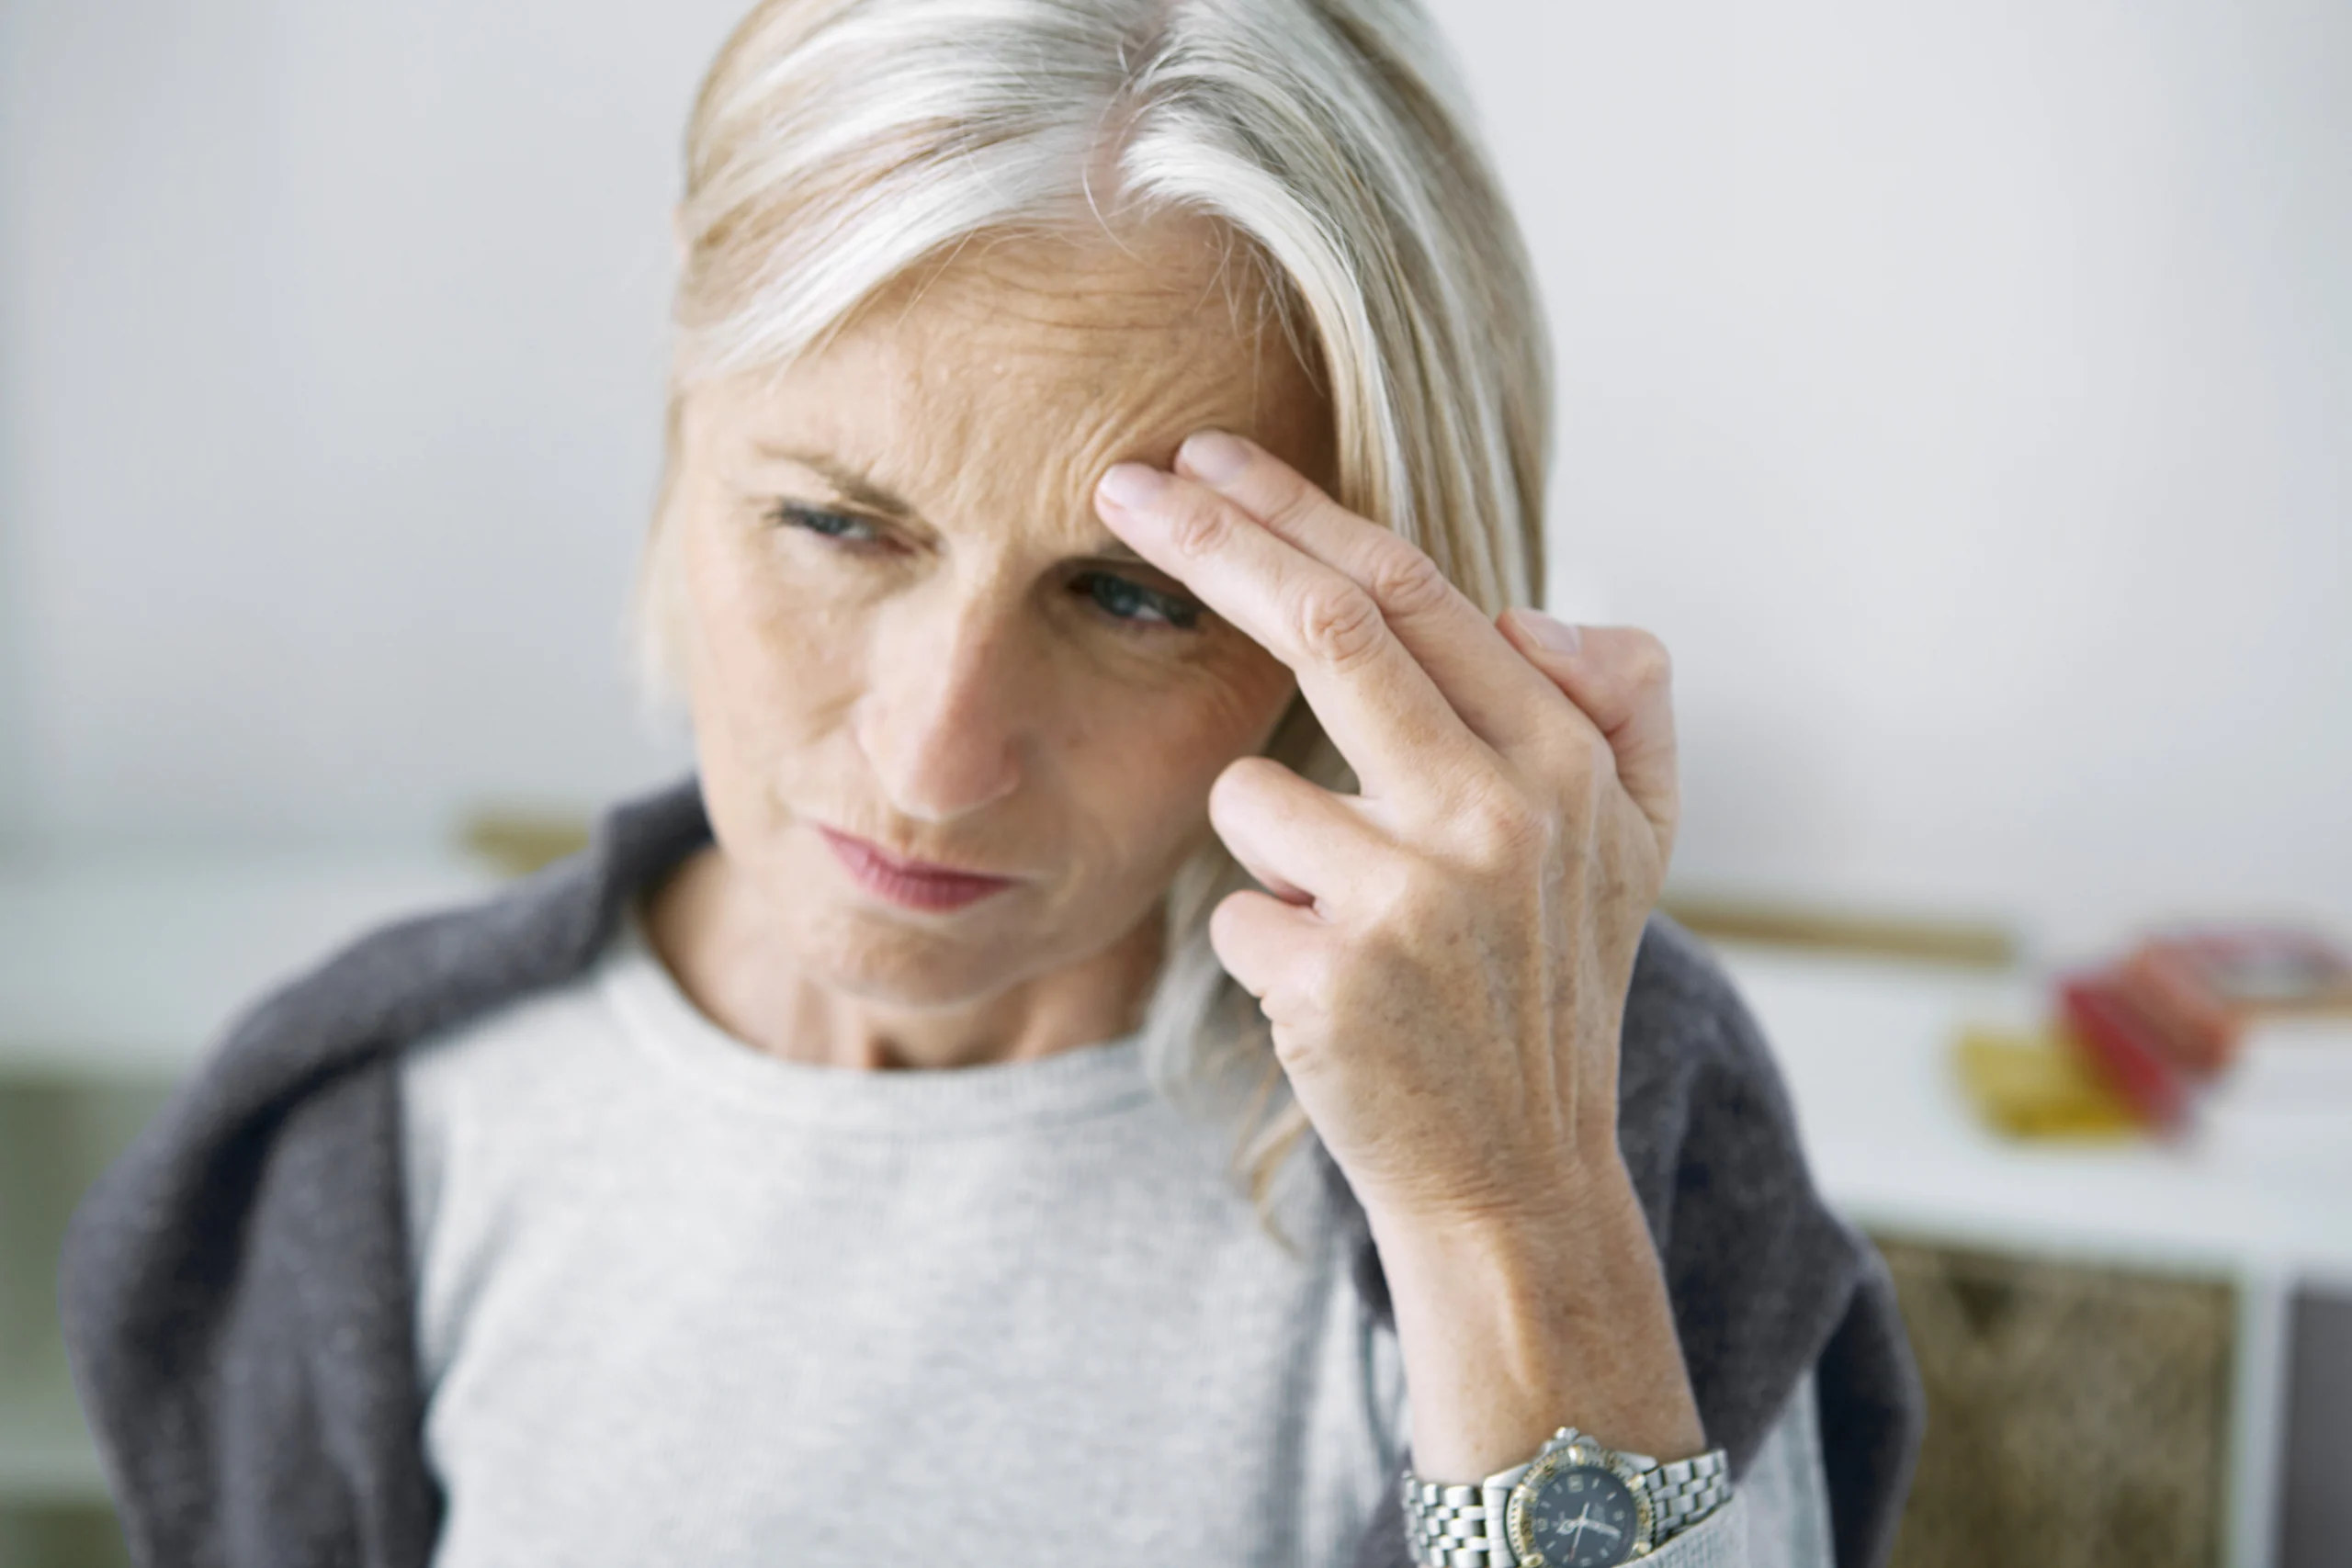 Older woman with a headache